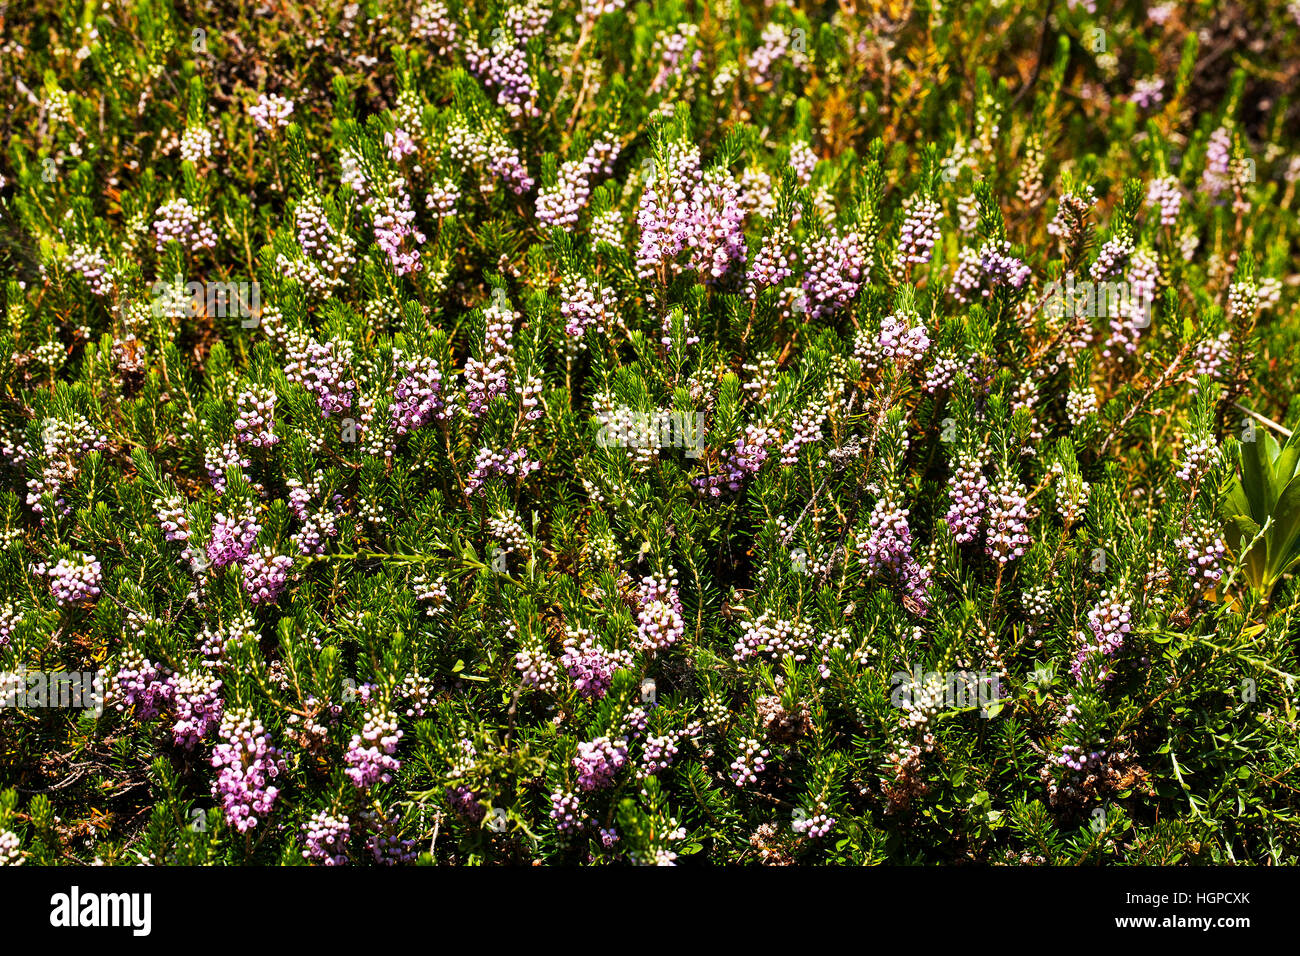 Cornish heath Erica vagans Pyrenees National Park France July 2015 Stock Photo